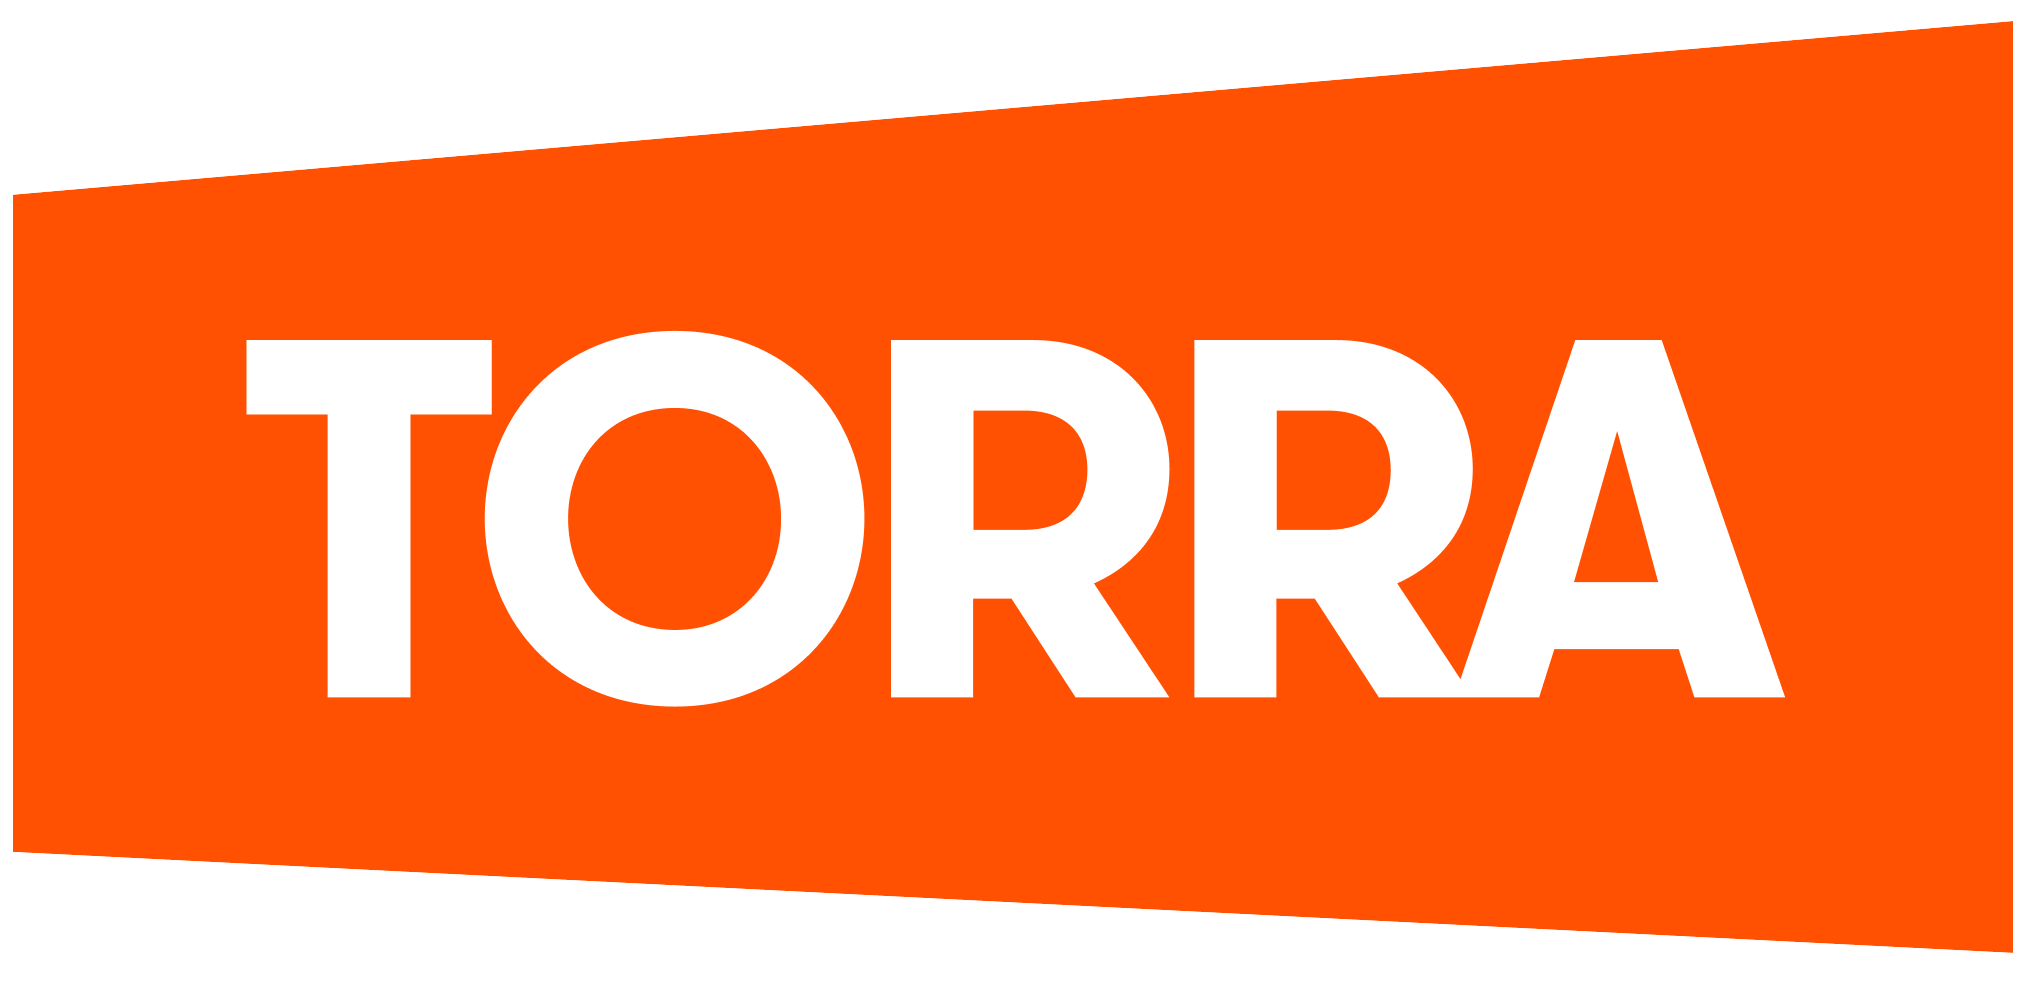 Logo lojas Torra